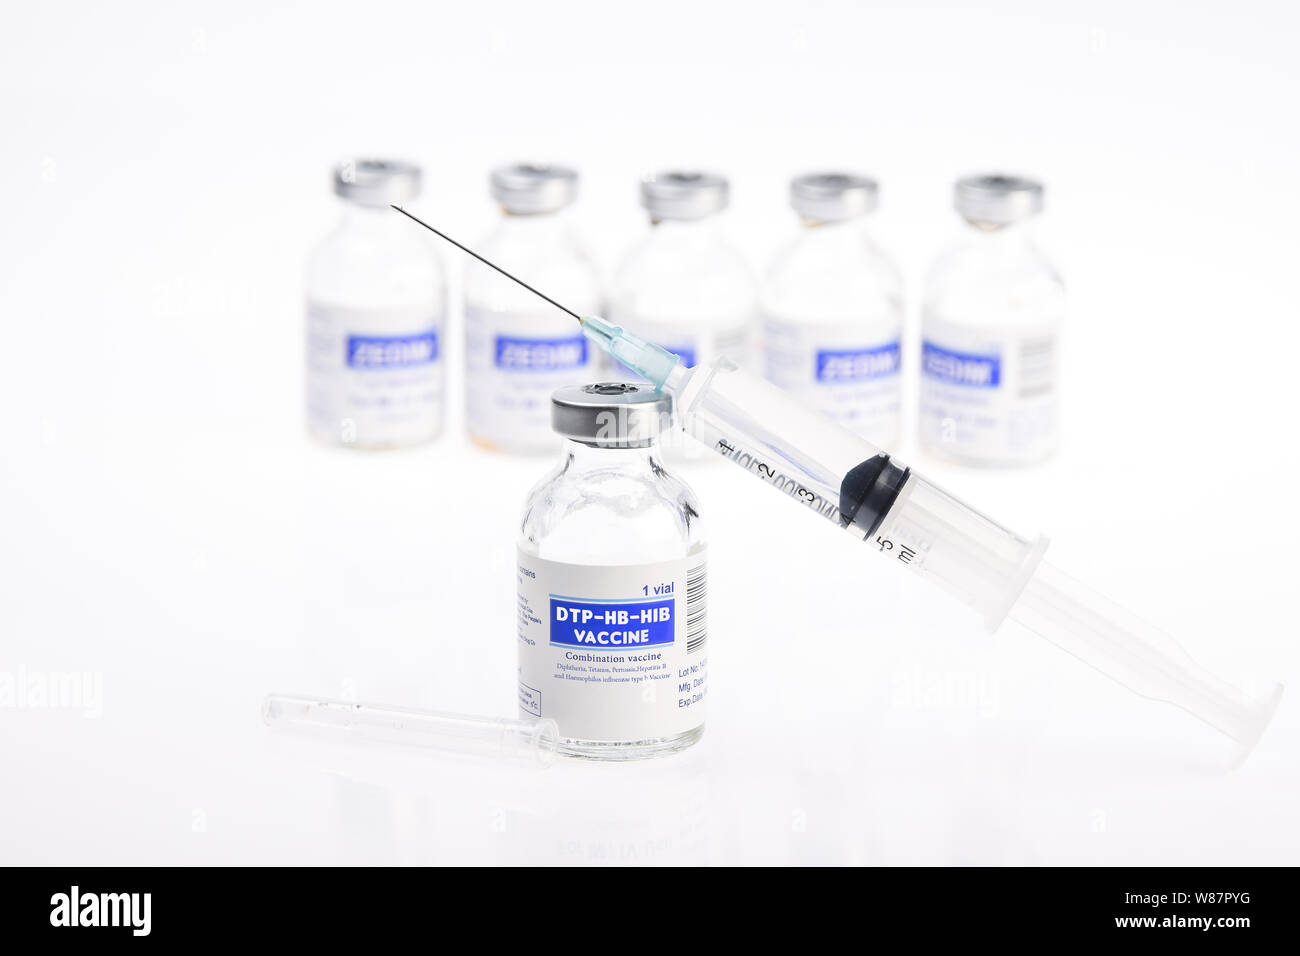 DTP-HB - Hib Kombination Impfstoff gegen Diphtherie, Tetanus, Pertussis, Hepatitis B und Haemophilus influenzae Typ b Konjugat Impfstoff adsorbiert. Impfstoff auf Stockfoto